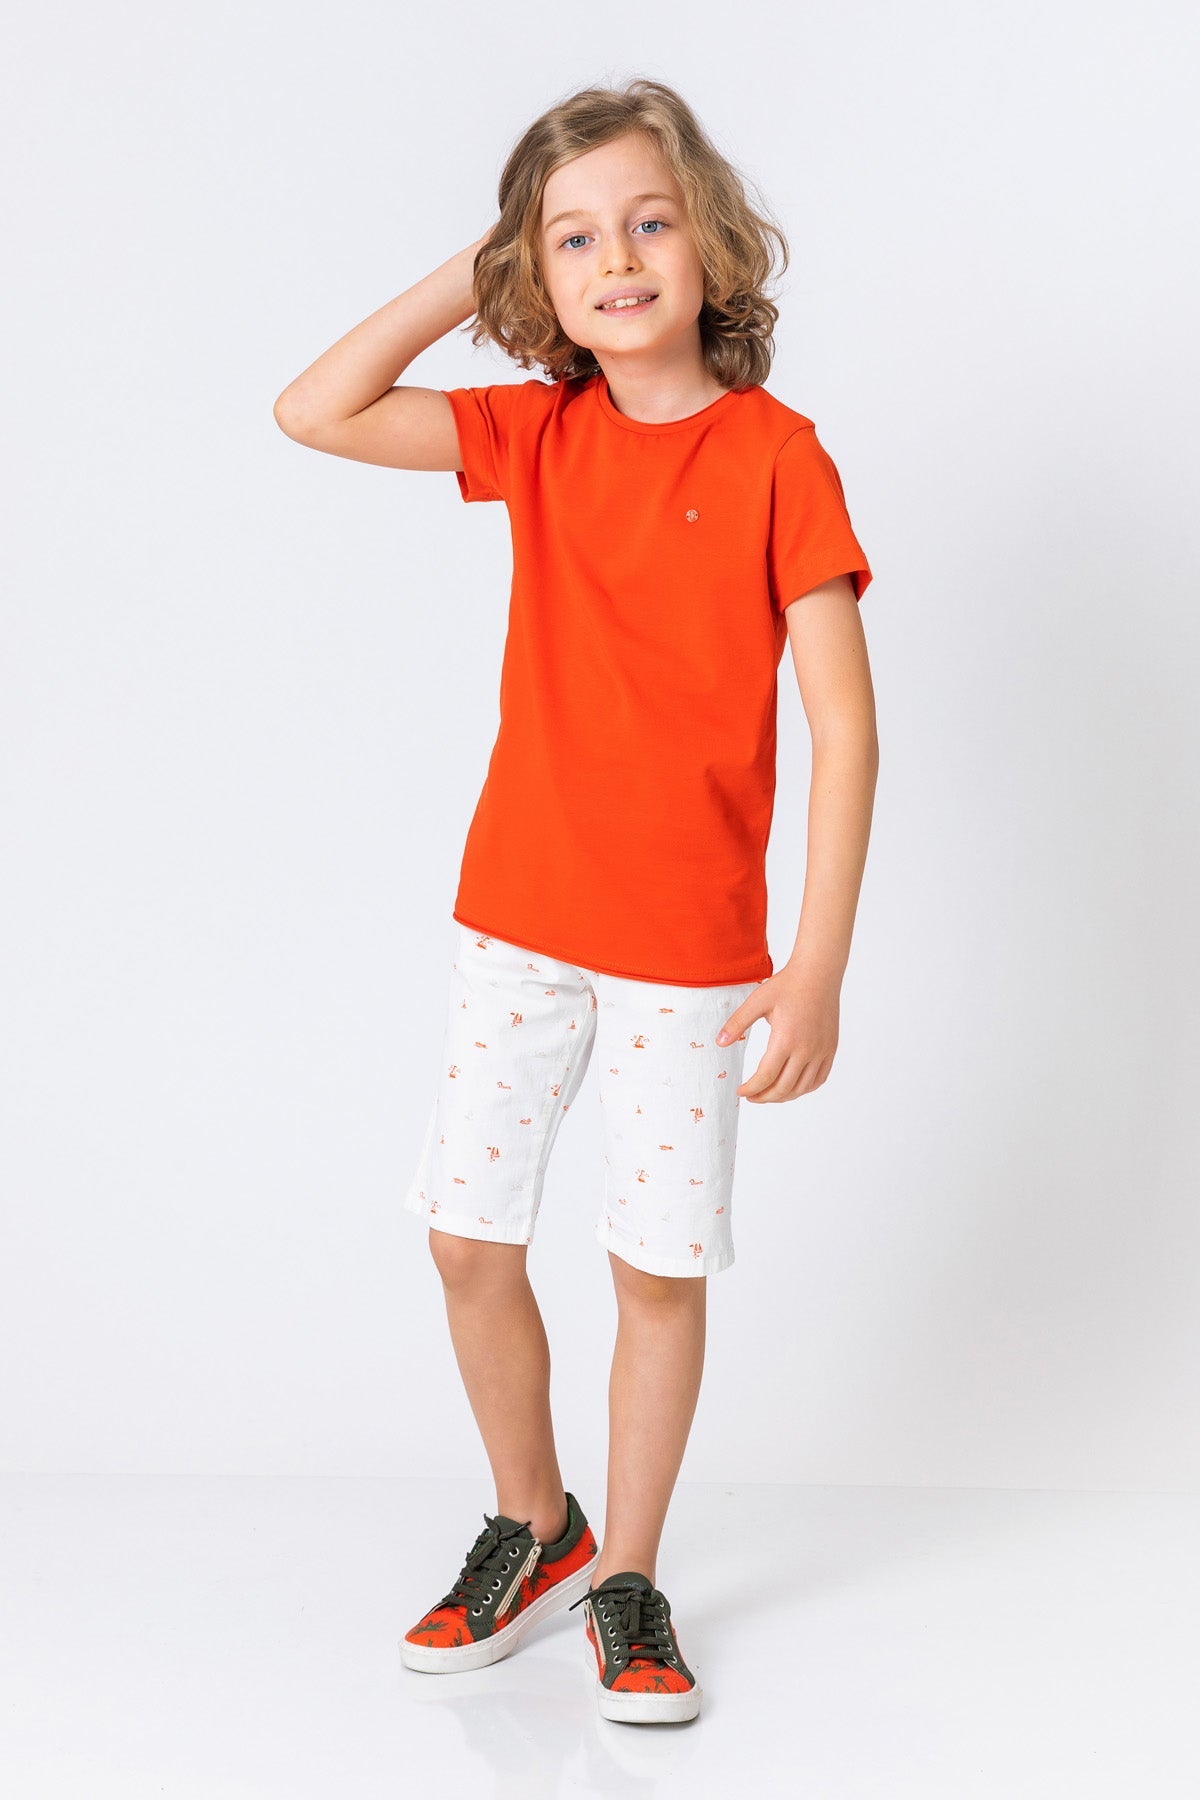 InCity Kids Boys Plain Basic Round Short T-Shirt Solid Sleeve Neck